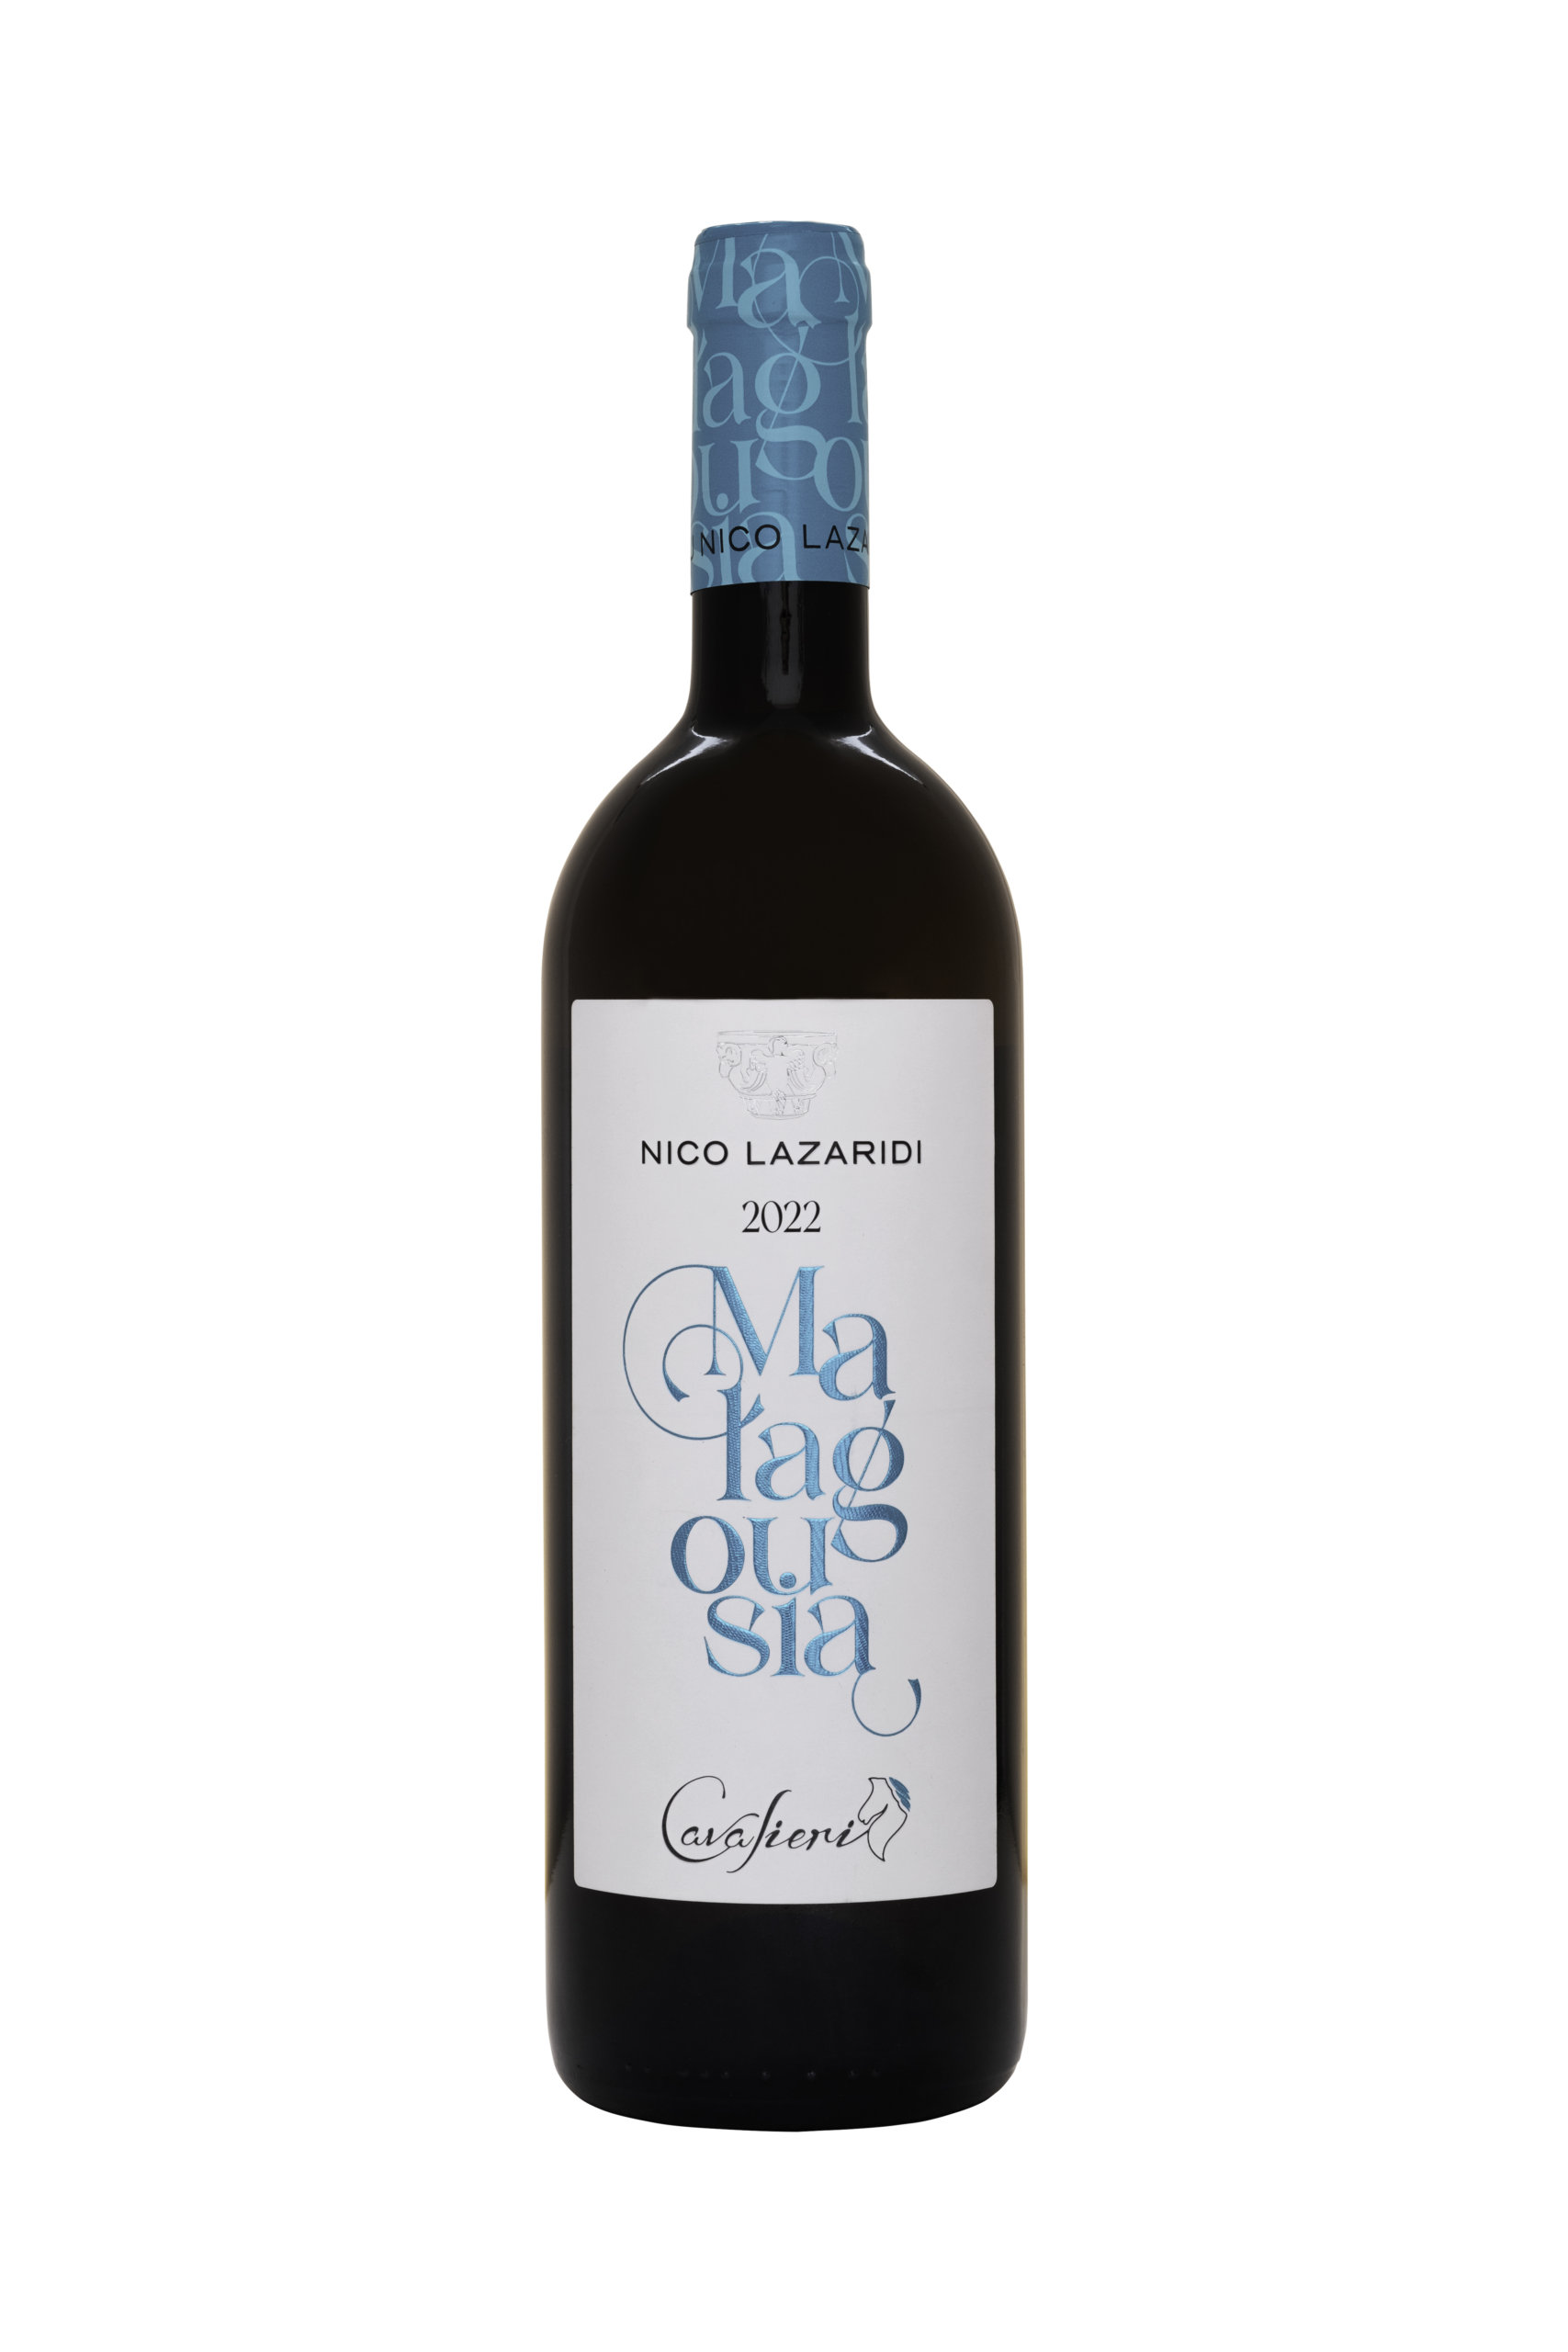 A bottle of Cavalieri Malagousia 2022